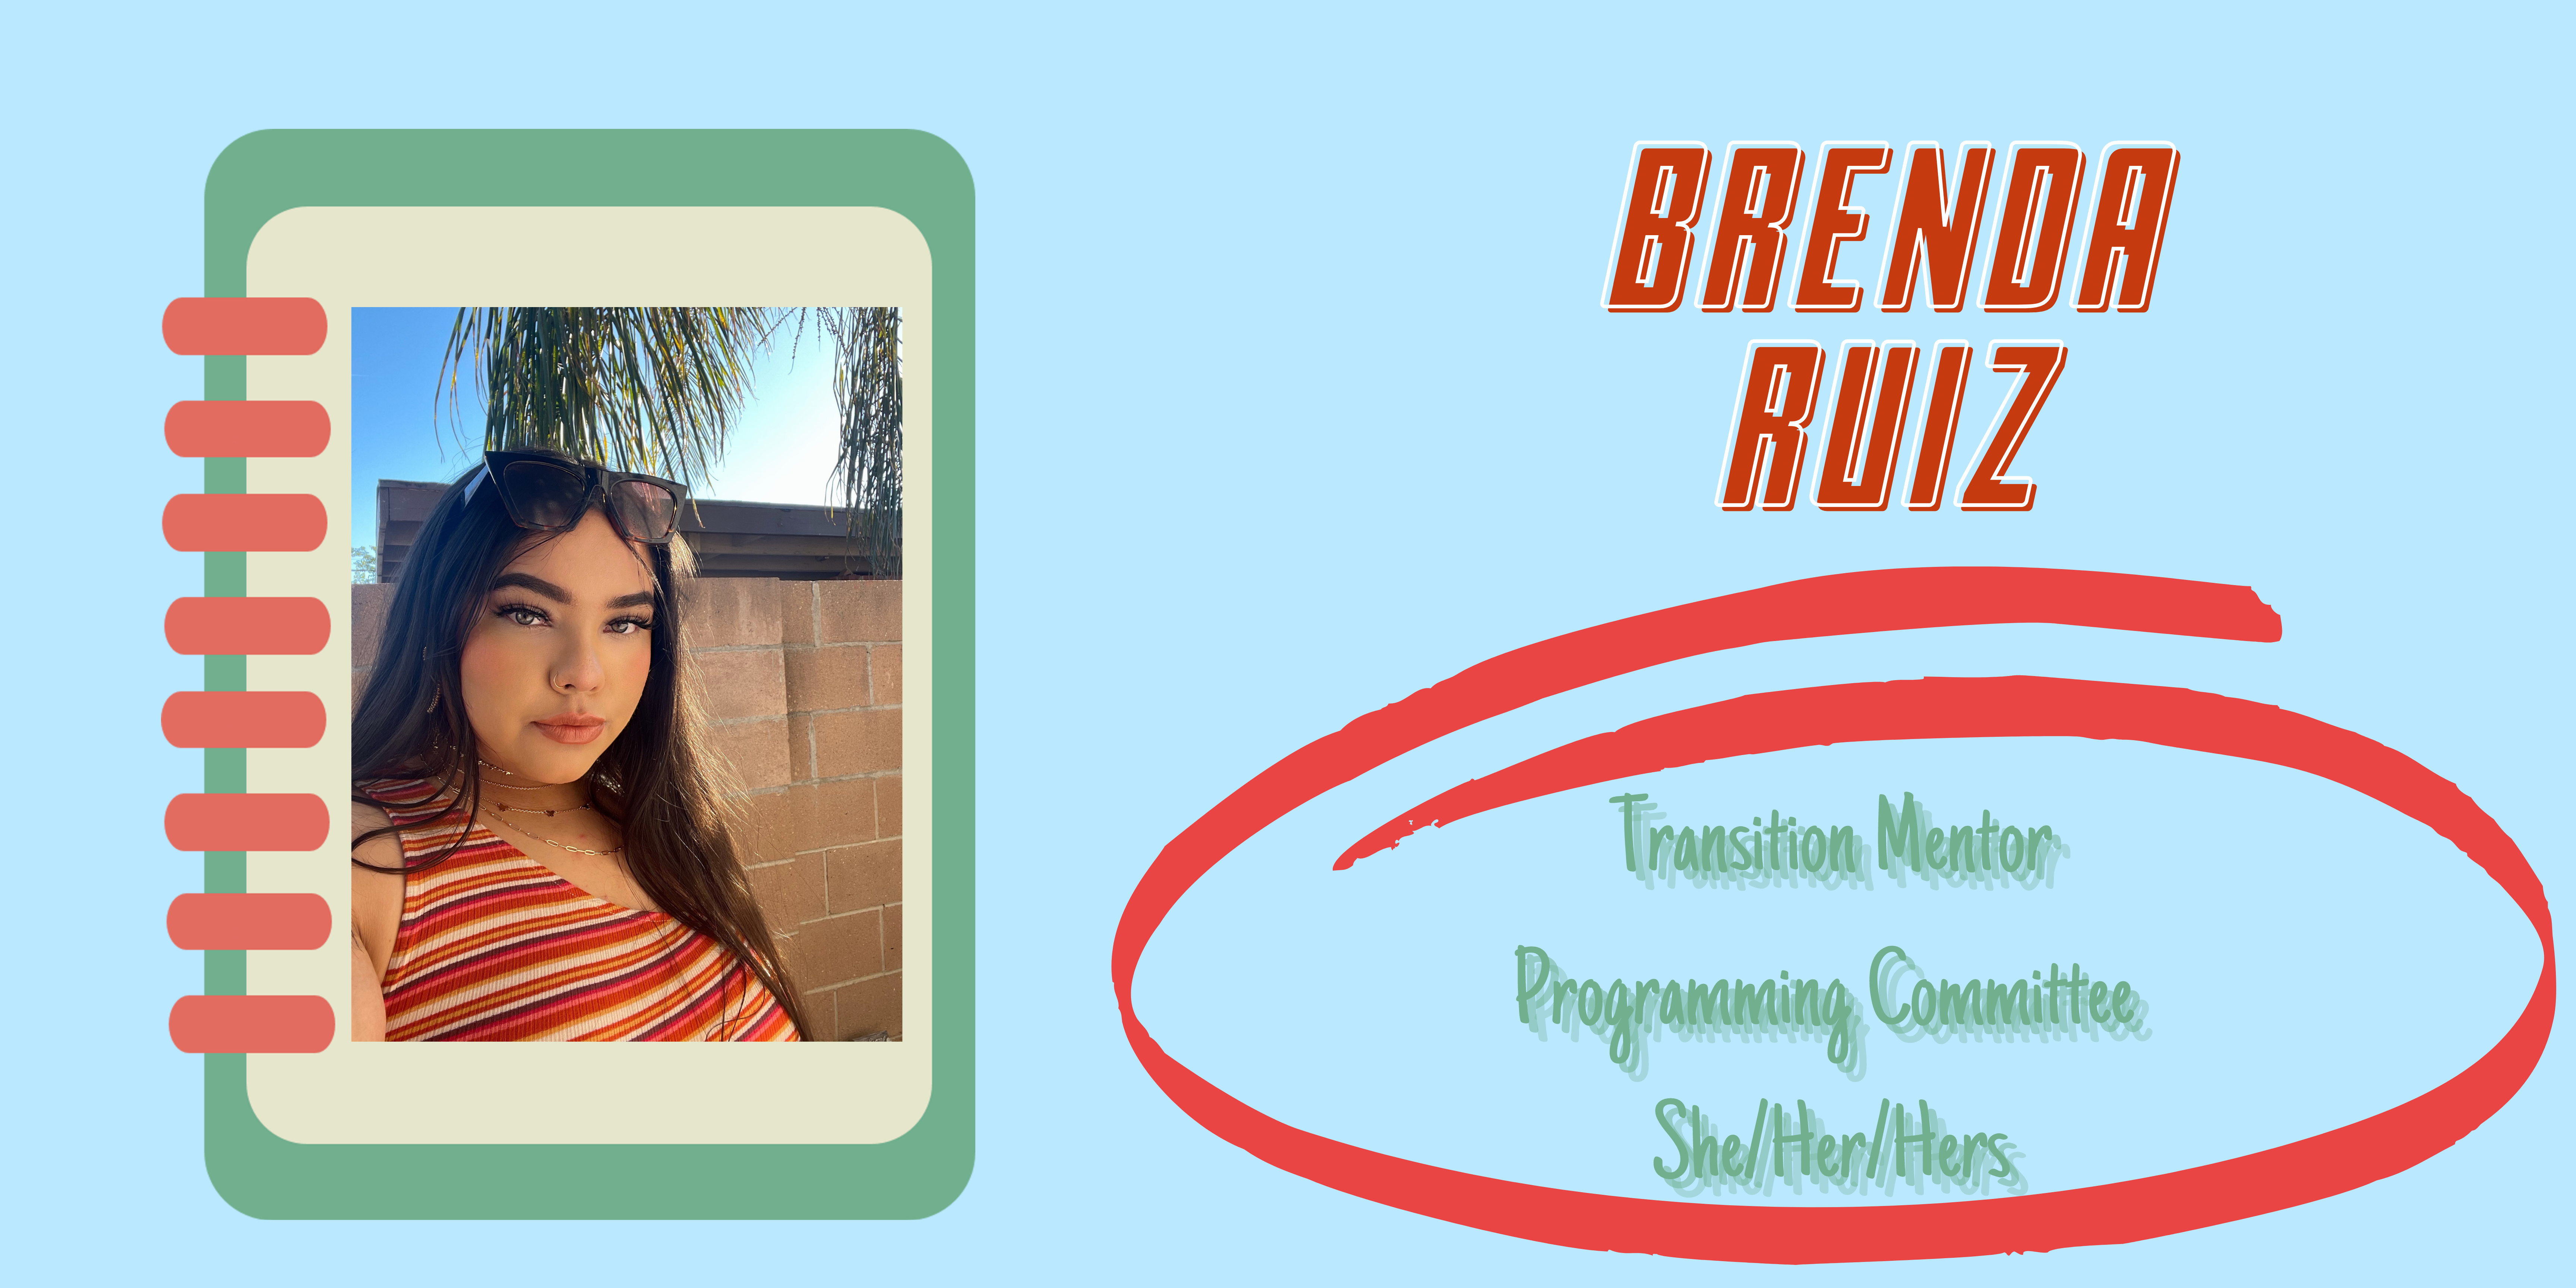 Transition Mentor: Brenda Ruiz, pronouns she/her, Programming Committee